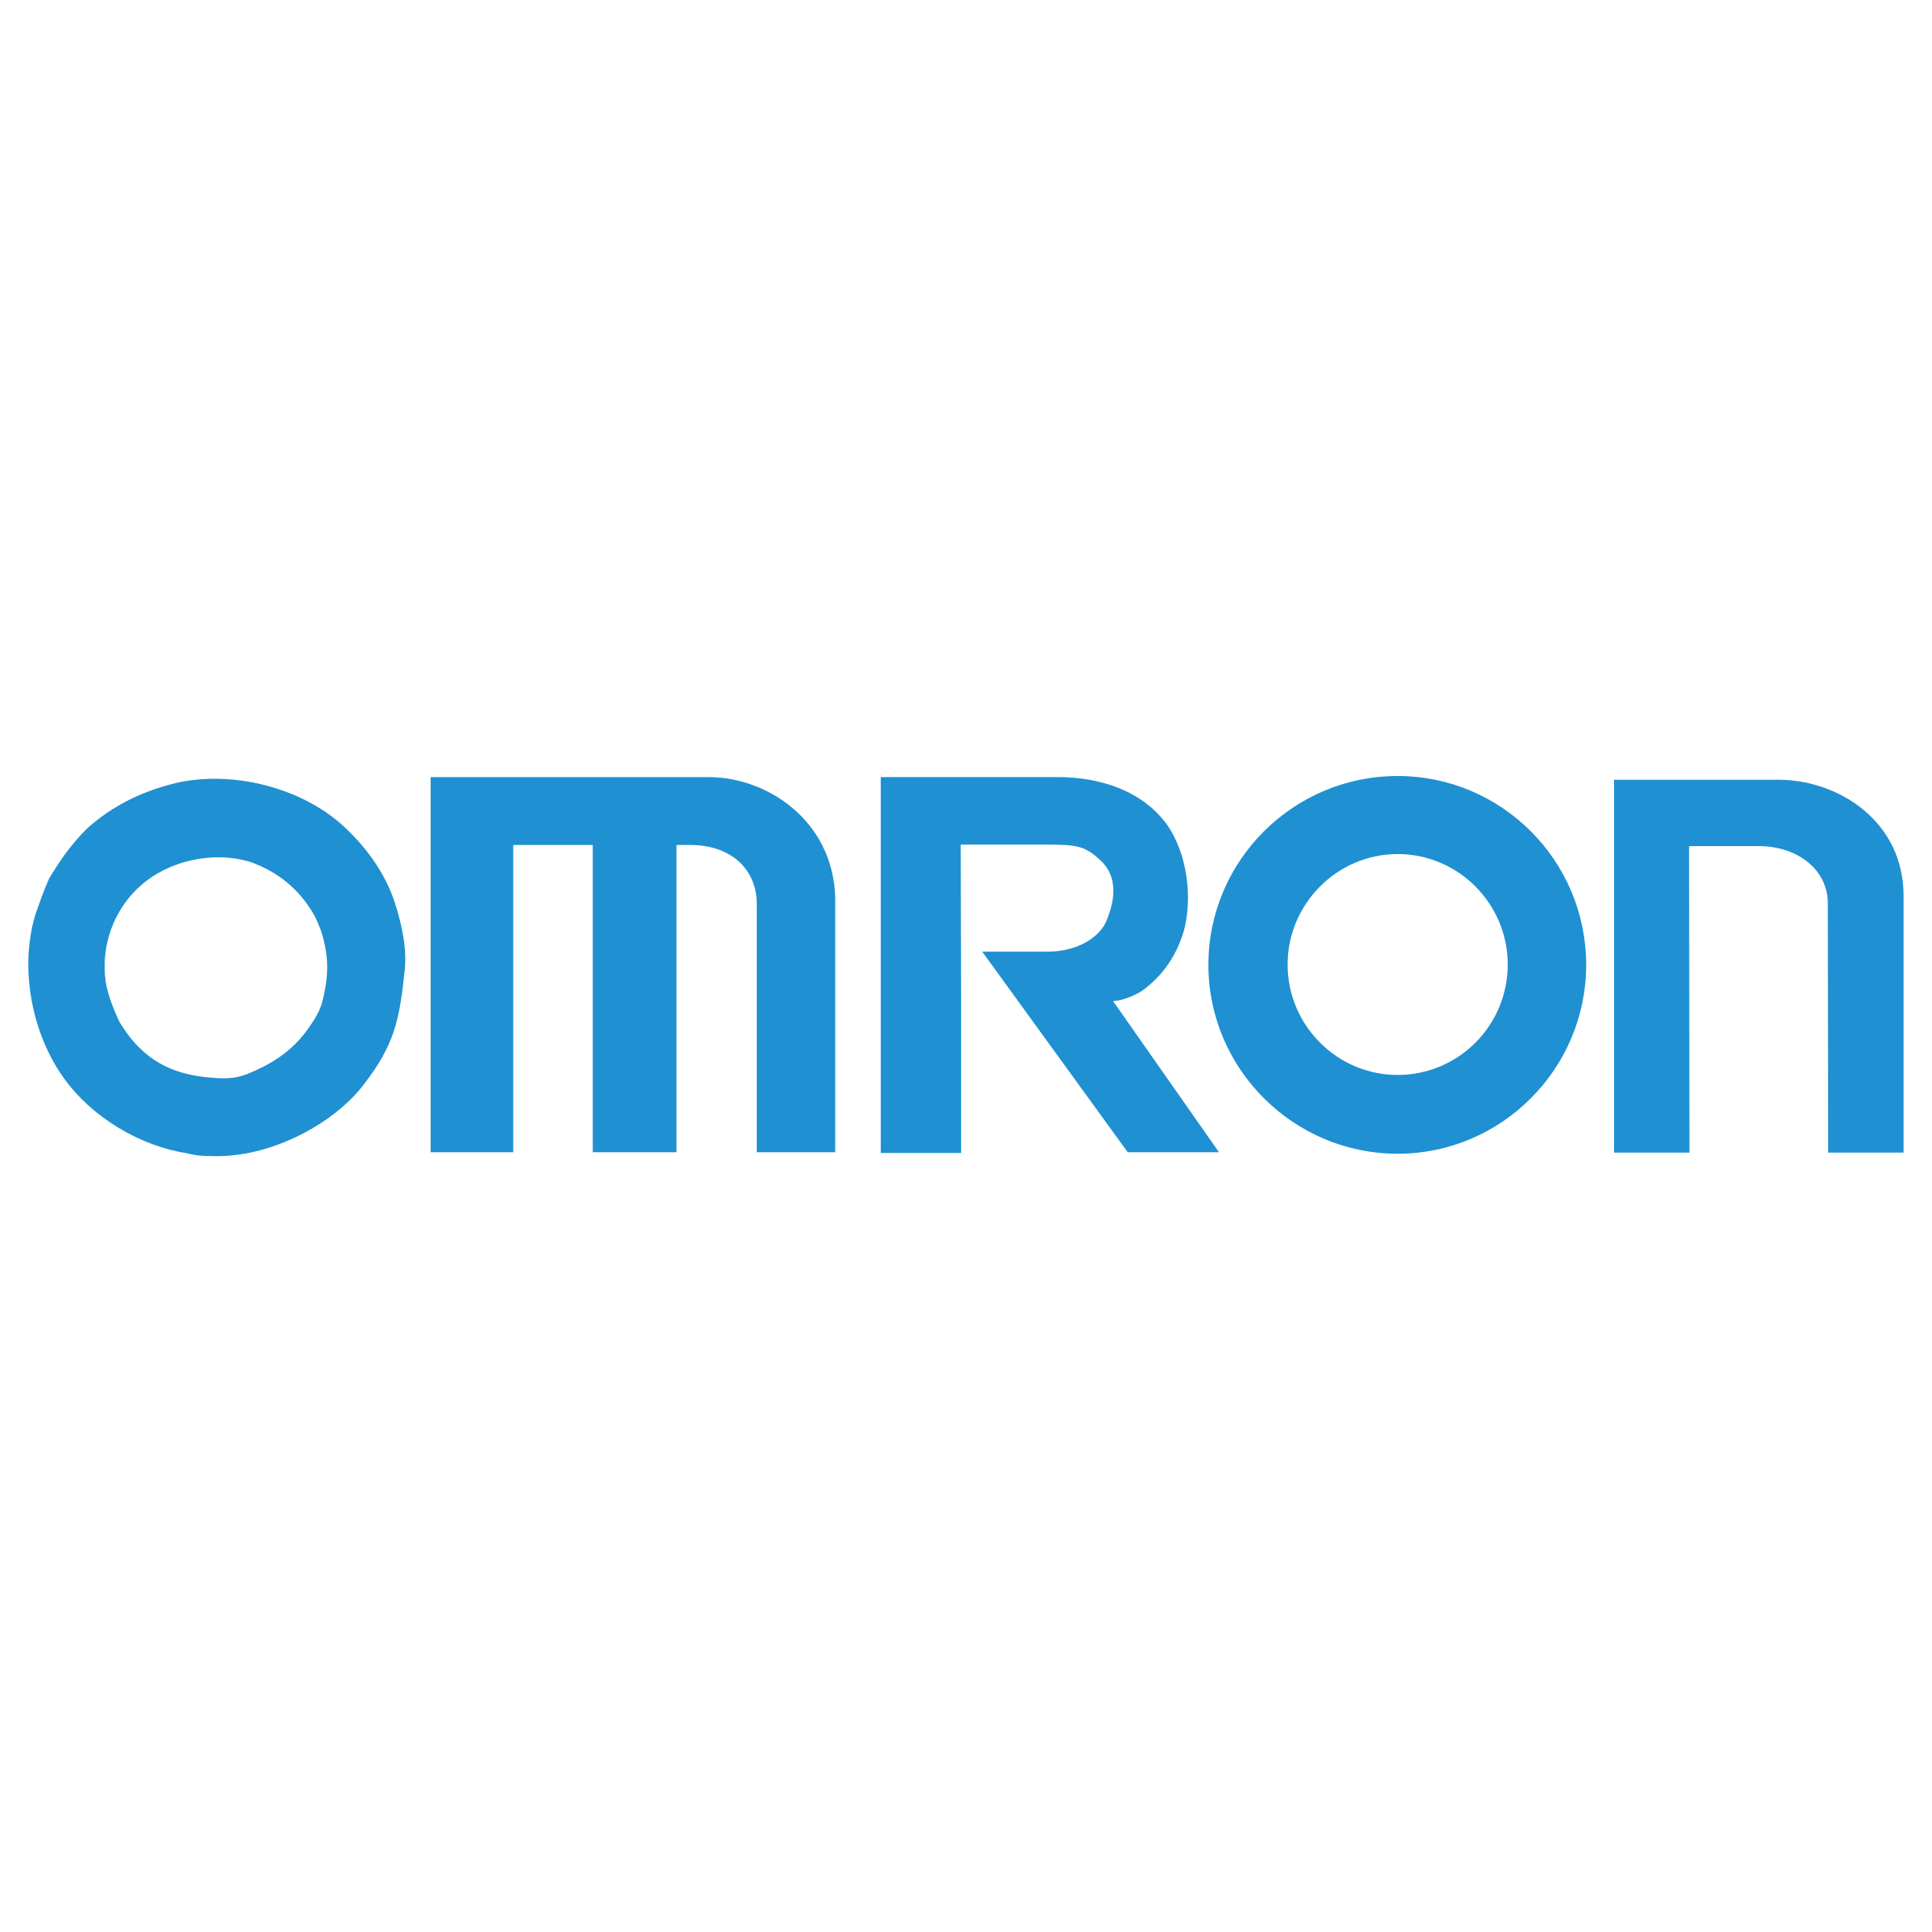 omron-logo-png-transparent.png